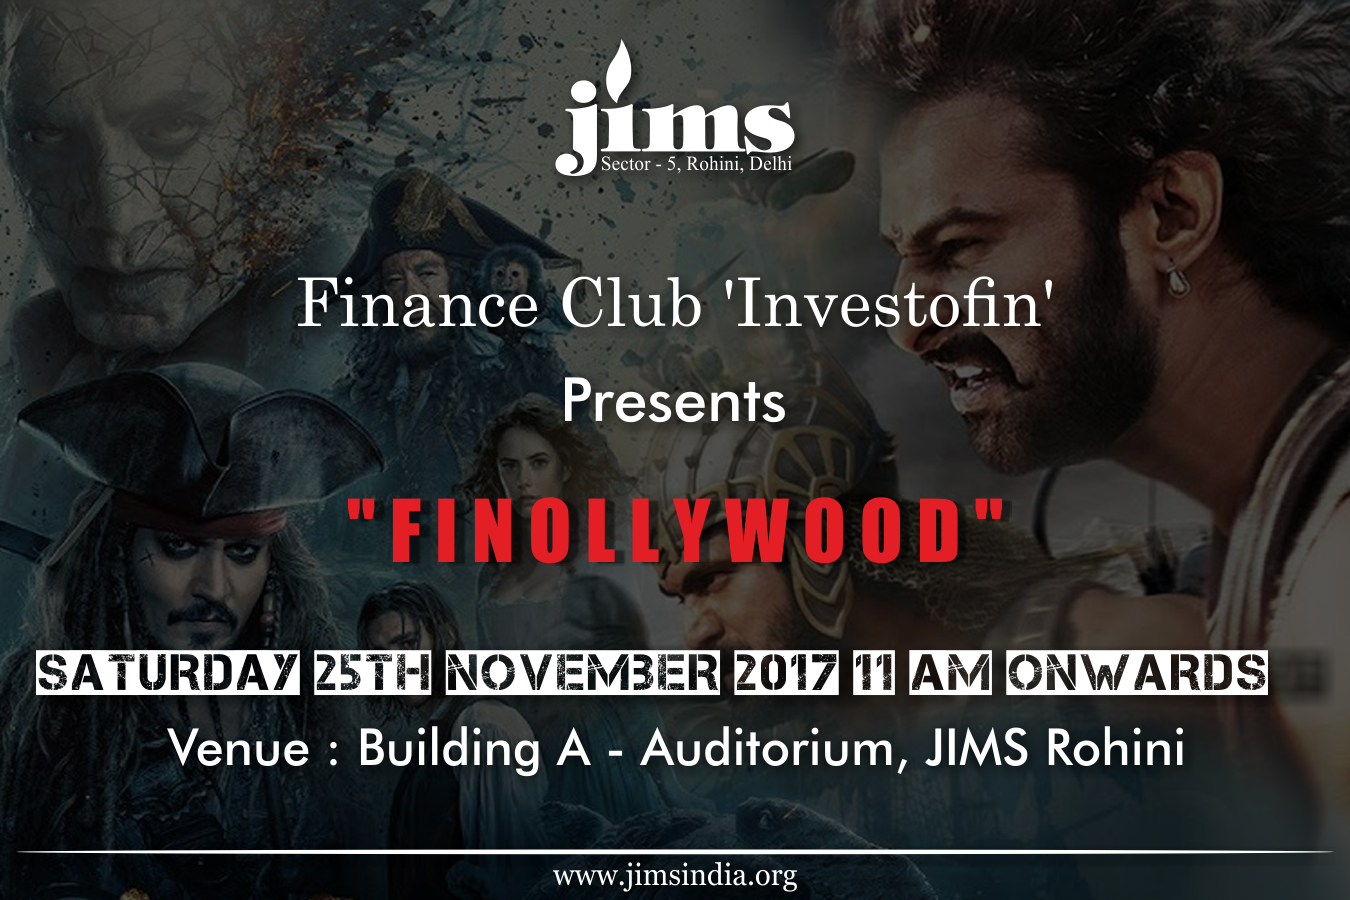 JIMS Finance Club 'Investofin' presents Finollywood 